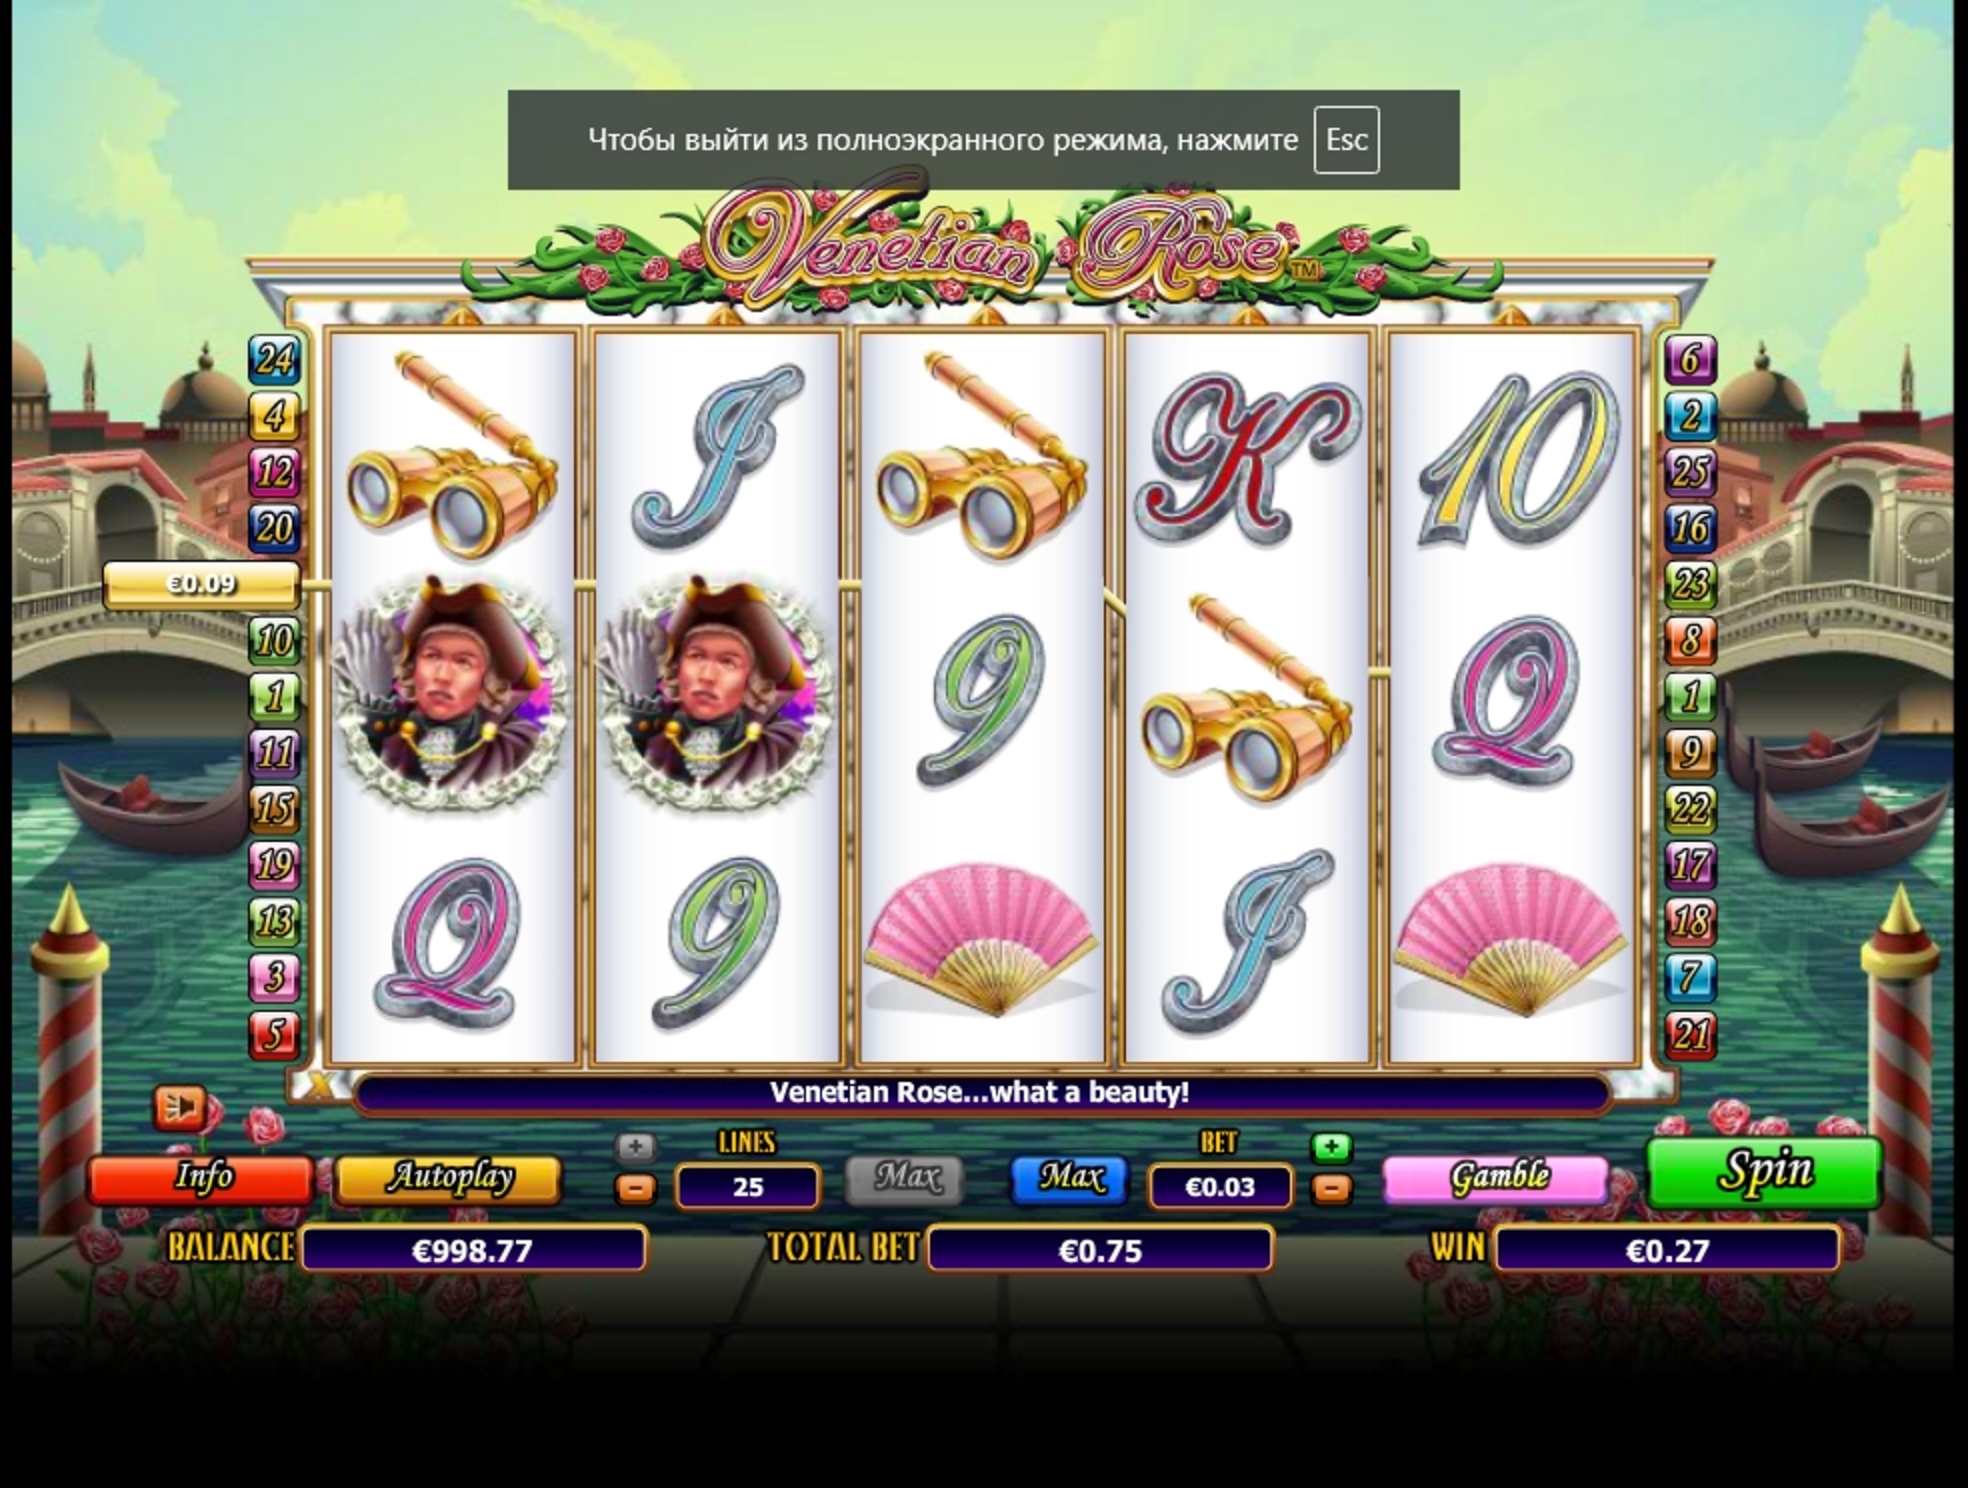 Win Money in Venetian Rose Free Slot Game by NextGen Gaming